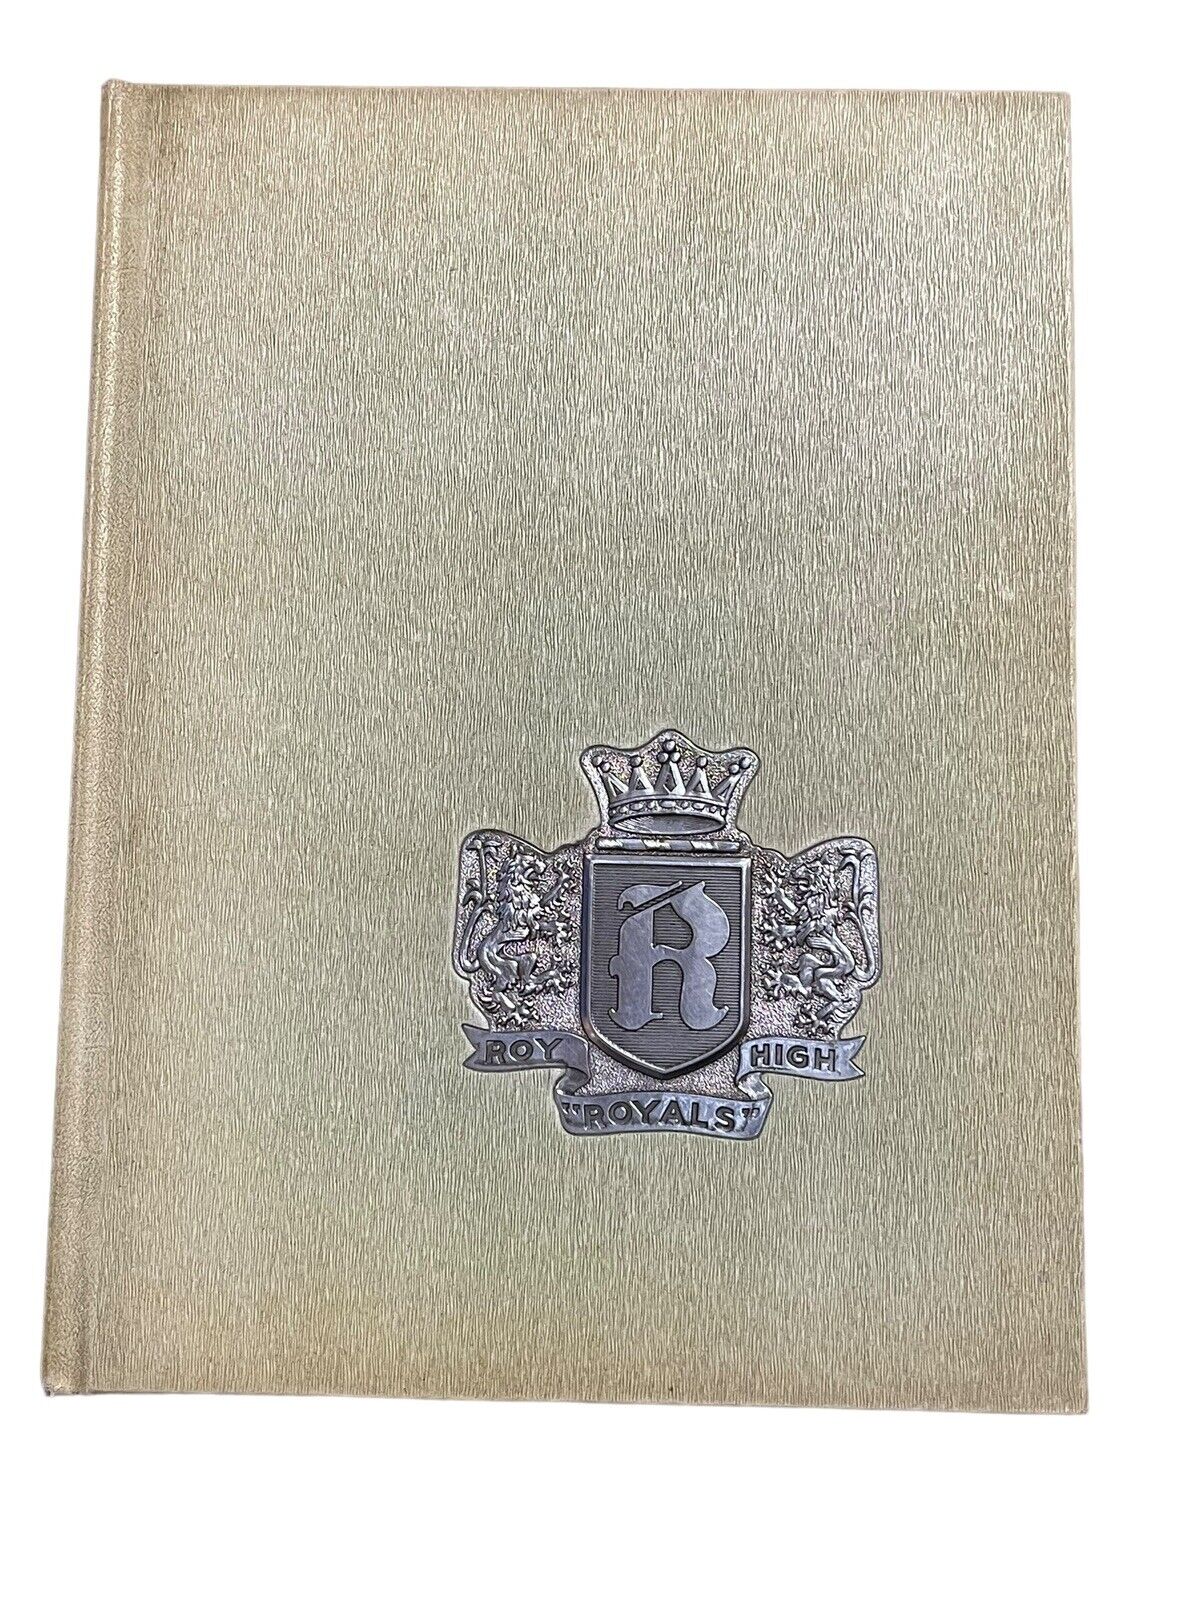 1969 Roy Utah Year Book Royals Annual High School Coat Of Arms